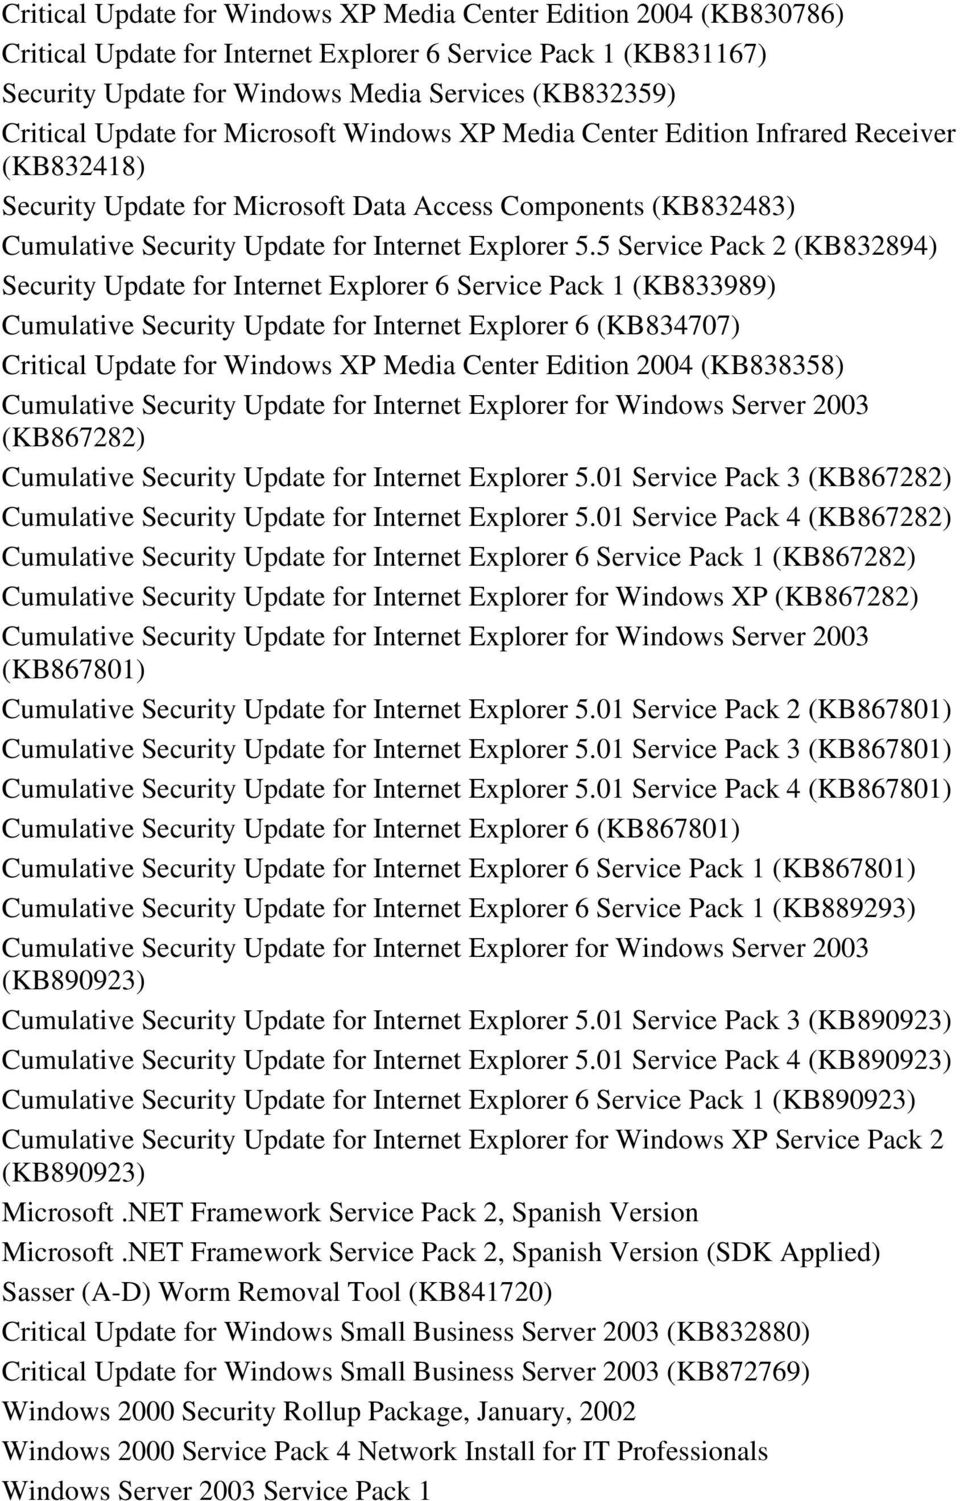 5 Service Pack 2 (KB832894) Security Update for Internet Explorer 6 Service Pack 1 (KB833989) Cumulative Security Update for Internet Explorer 6 (KB834707) Critical Update for Windows XP Media Center